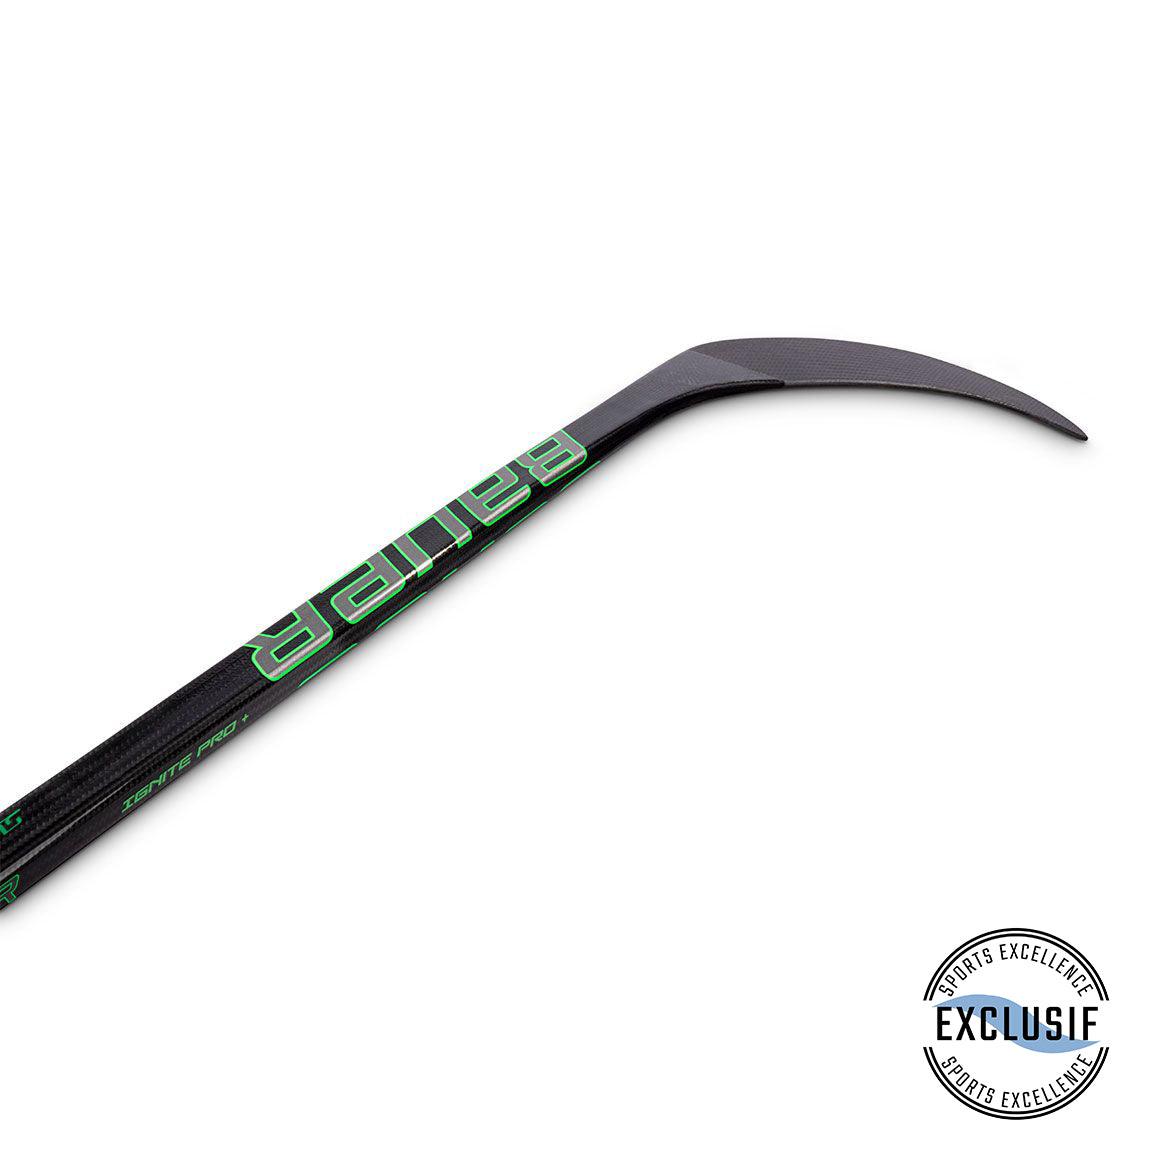 Supreme Ignite Pro+ Hockey Stick - Senior